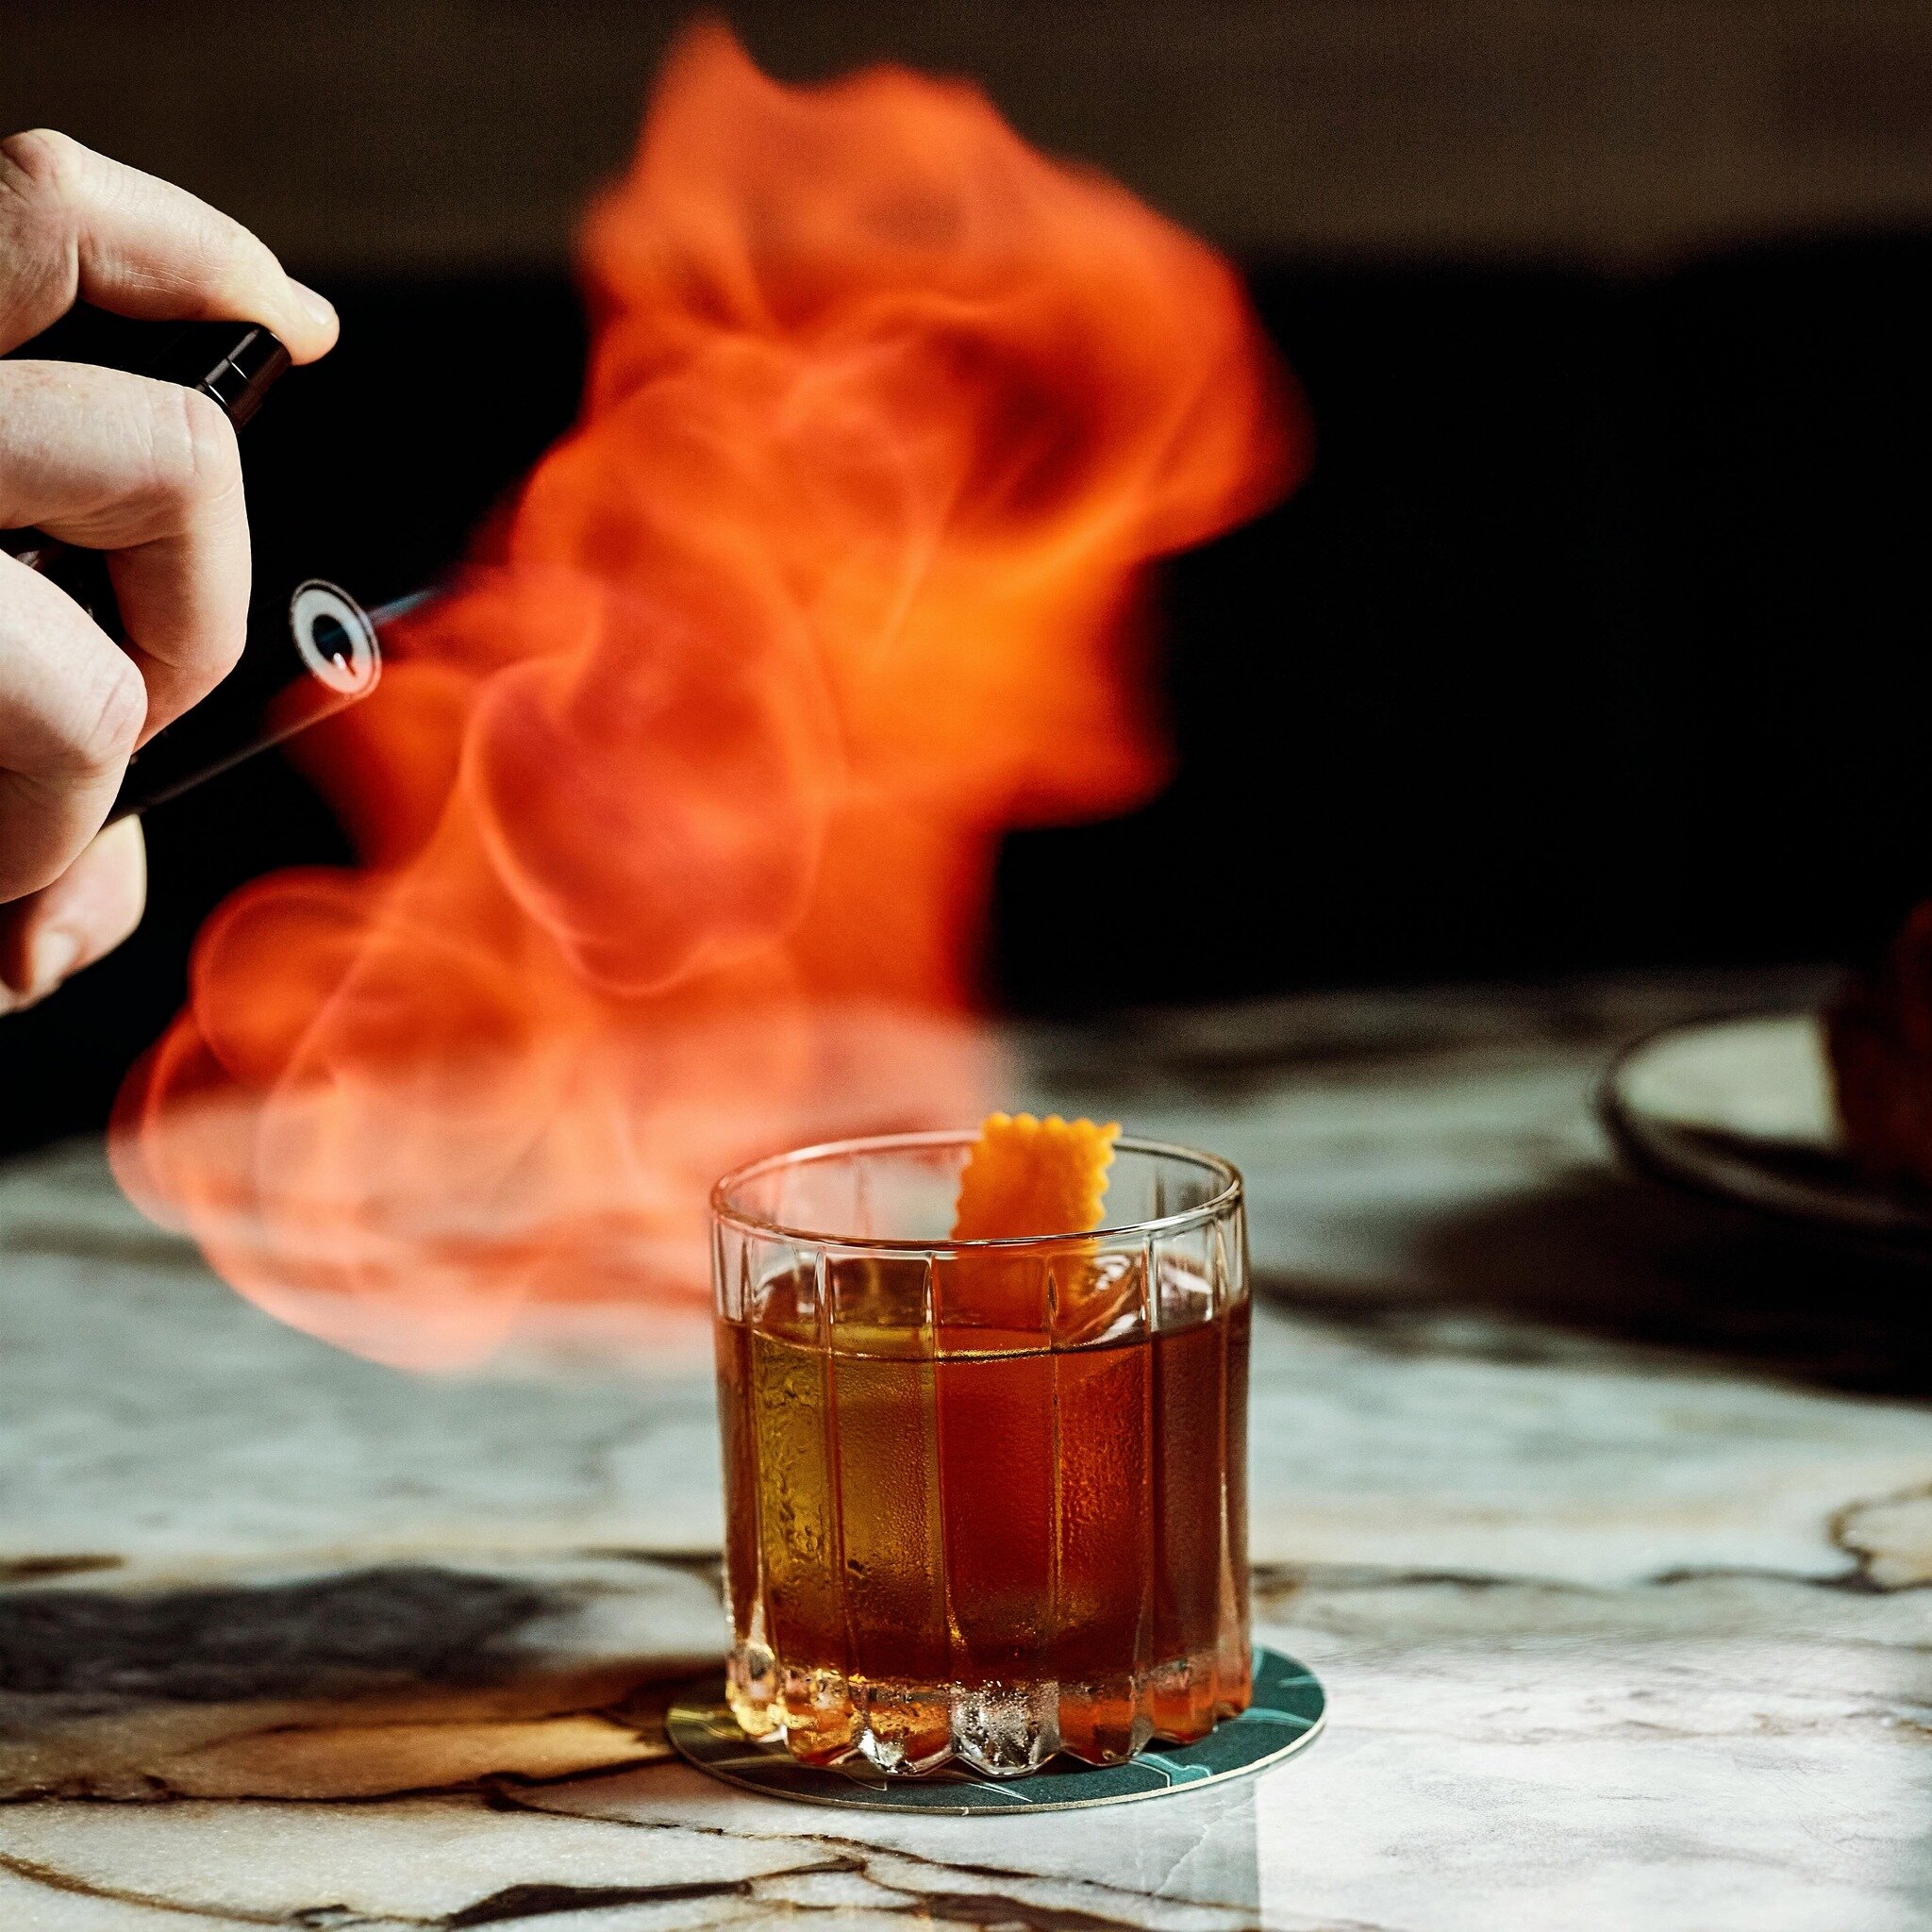 NO SMOKE WITHOUT FIRE
Bourbon, coffee, amaro, demerara, smoke
@allelostpete #foodphotography #cocktails